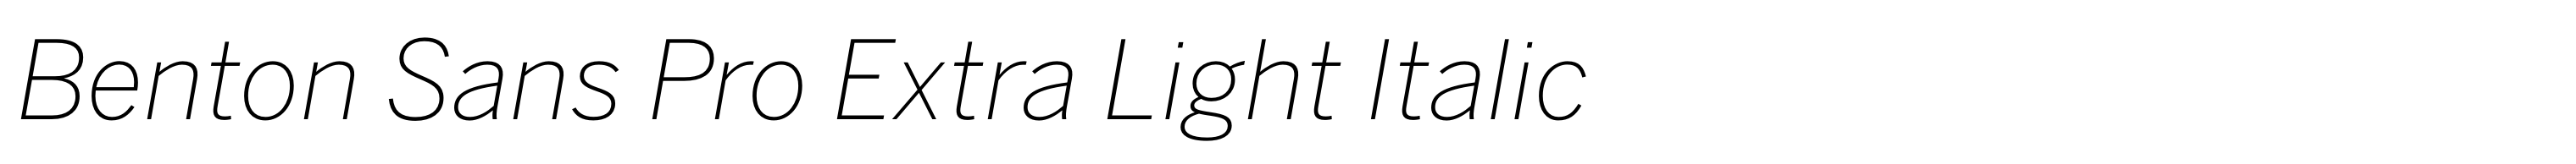 Benton Sans Pro Extra Light Italic